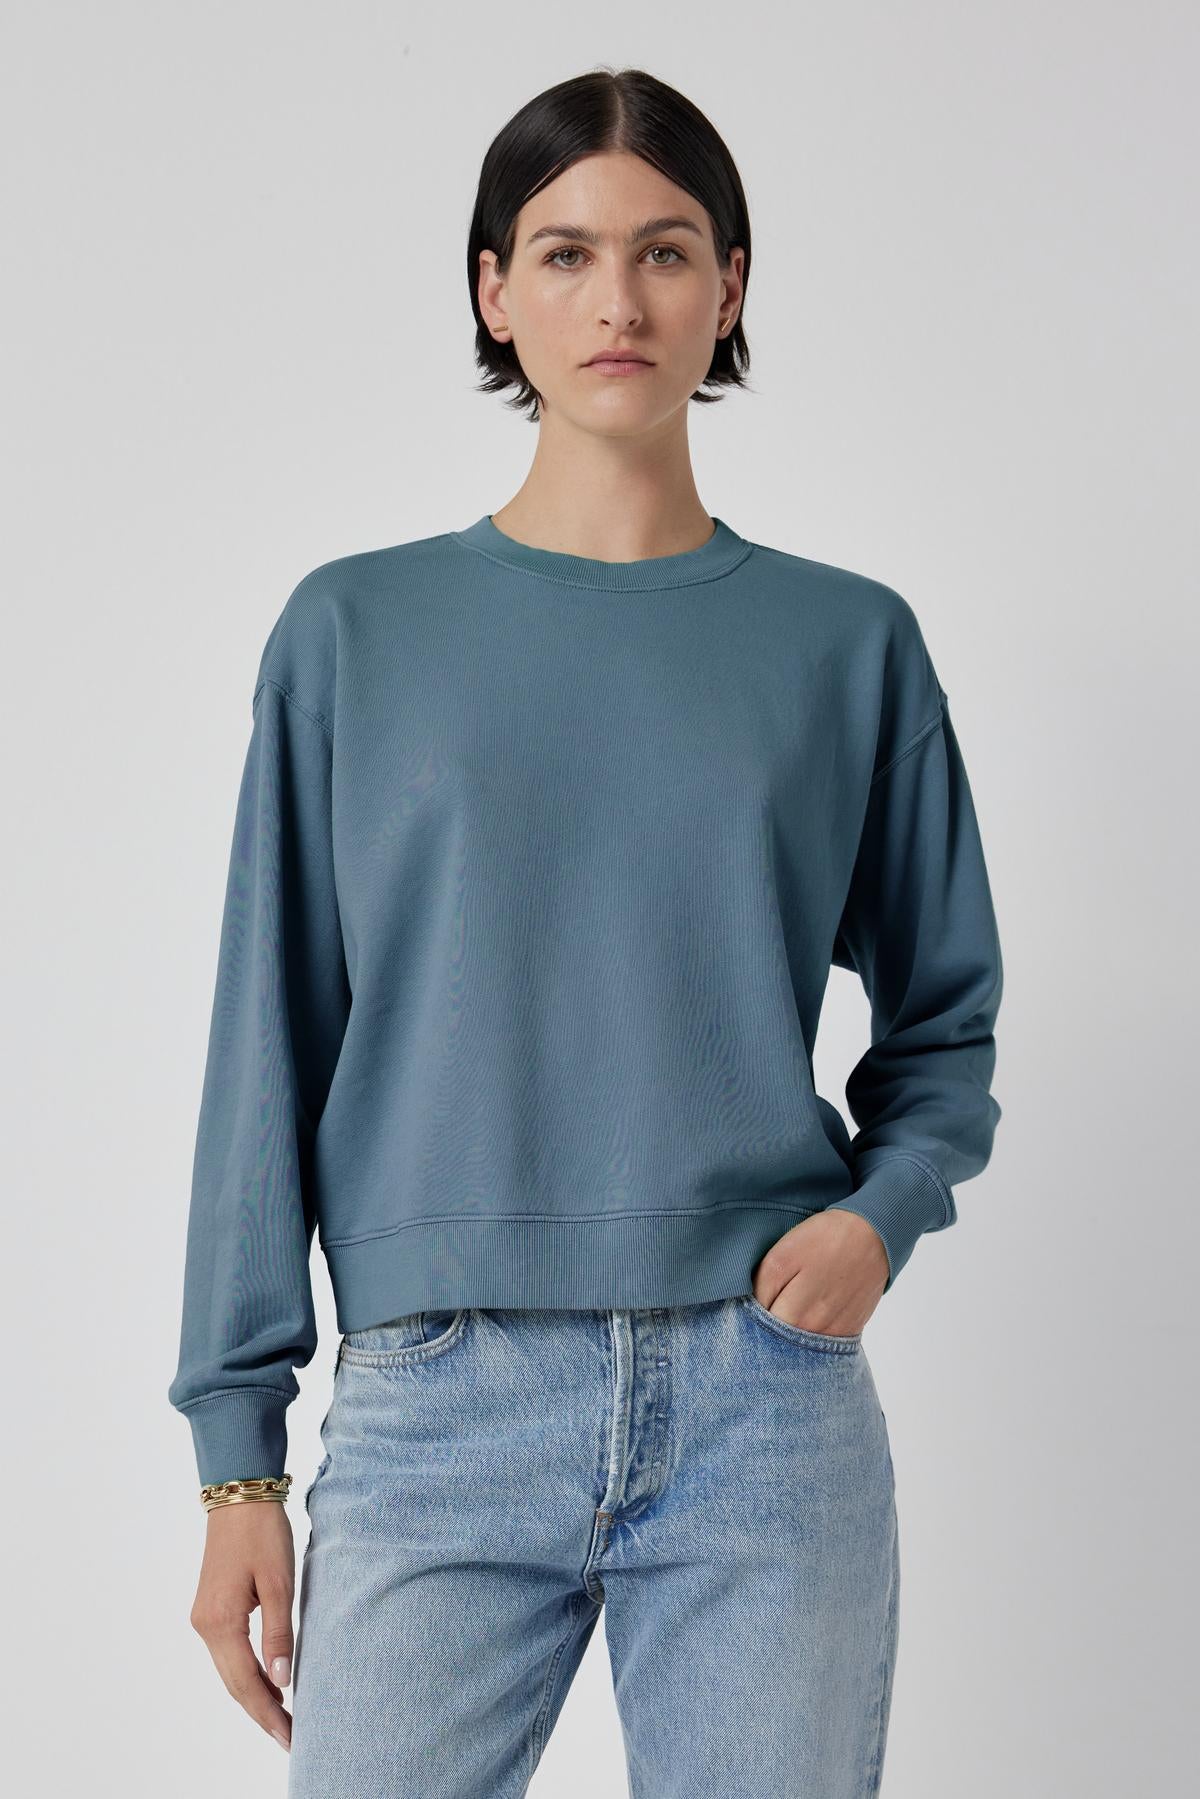   The model is wearing a Velvet by Jenny Graham Ynez sweatshirt and jeans. 